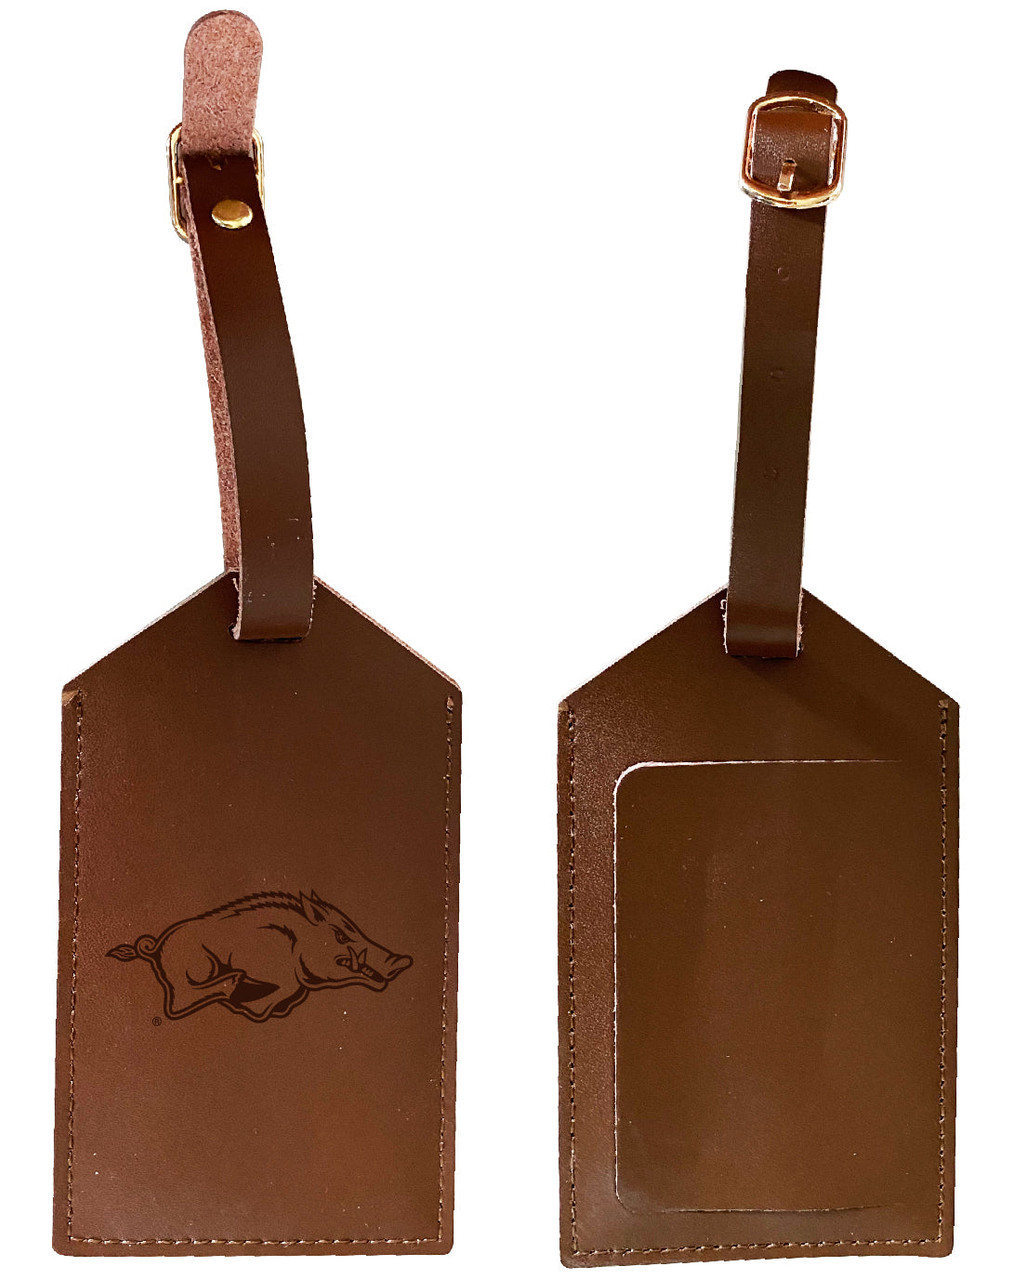 Arkansas Razorbacks Leather Luggage Tag Engraved